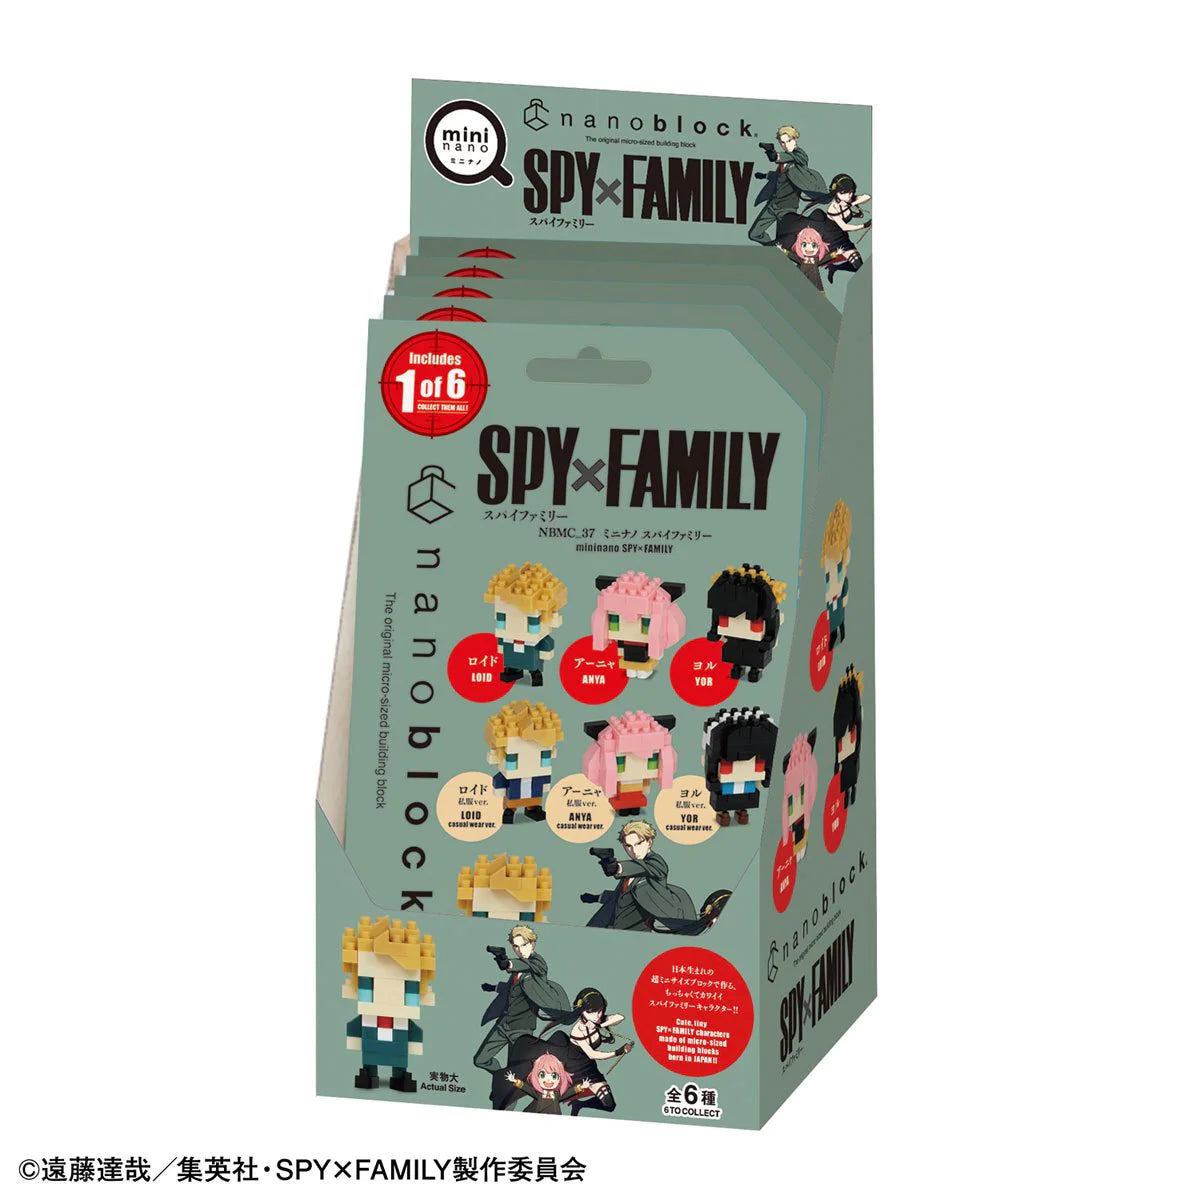 Spy x Family Nanoblock - Mininano Series - Volume 1